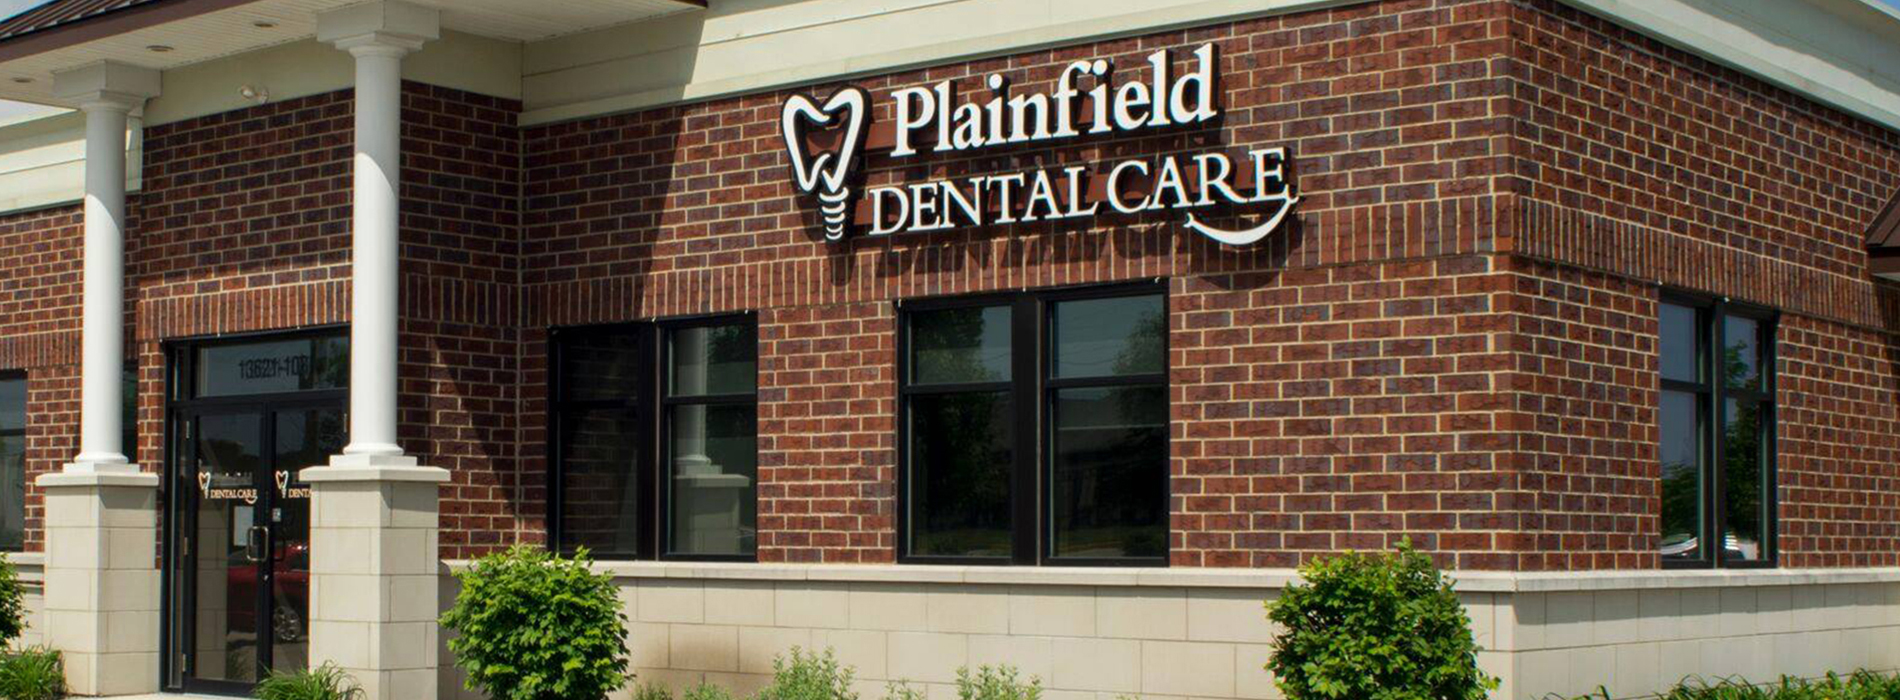 Plainfield Dental Care | Teeth Whitening, Teeth Sealants and Veneers and Laminates